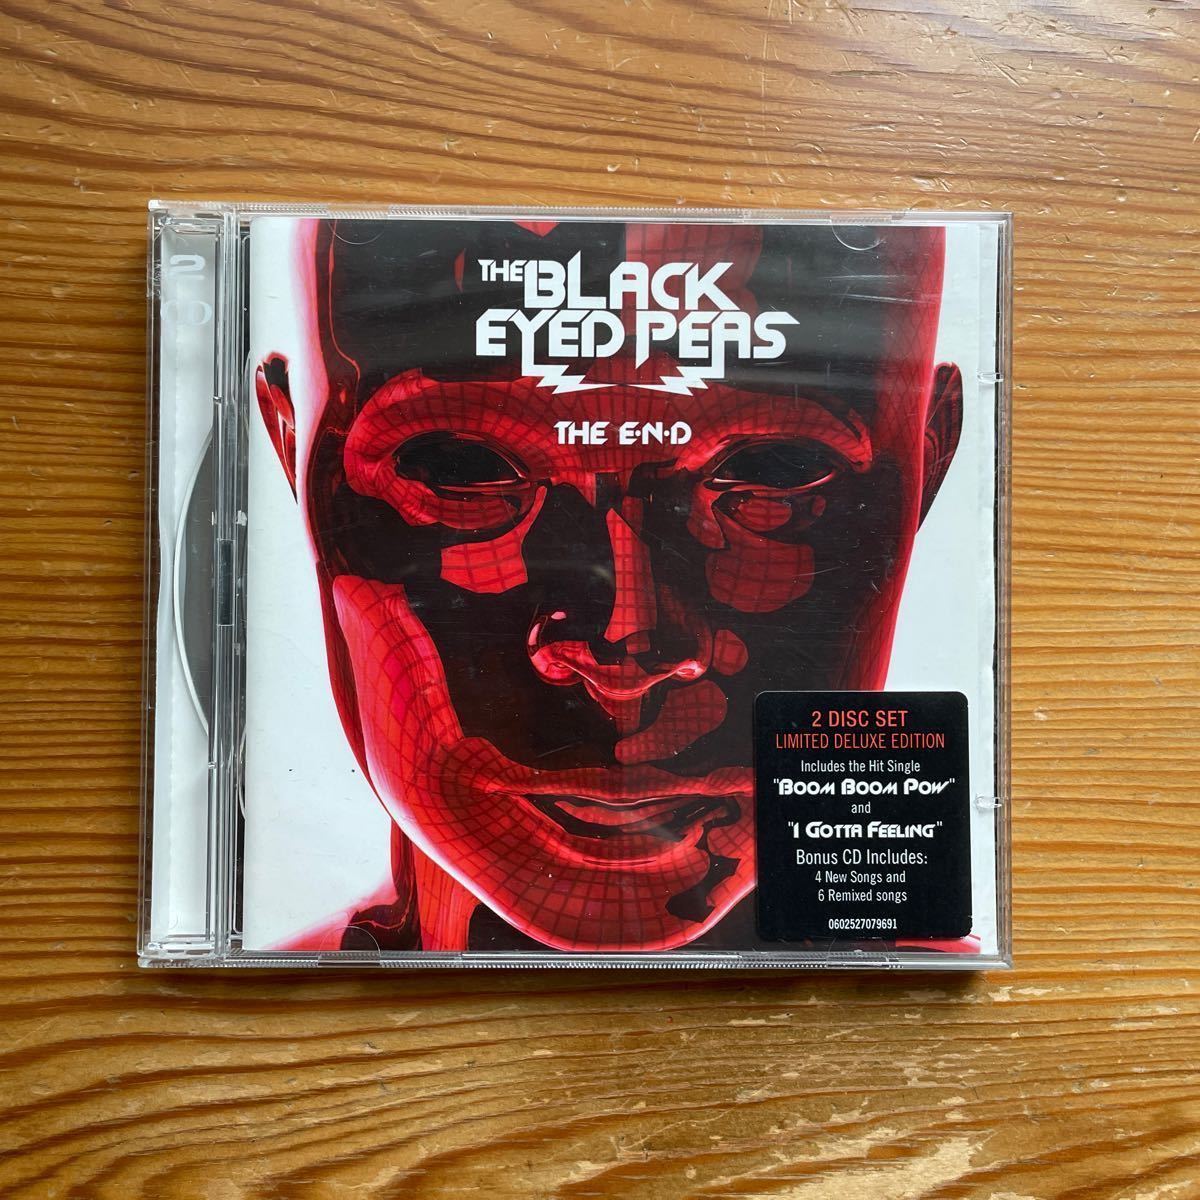 [3CD] ブラック・アイド・ピーズ　THE BLACK EYED PEAS / The E.N.D + Monkey Business +The Beginning_画像5